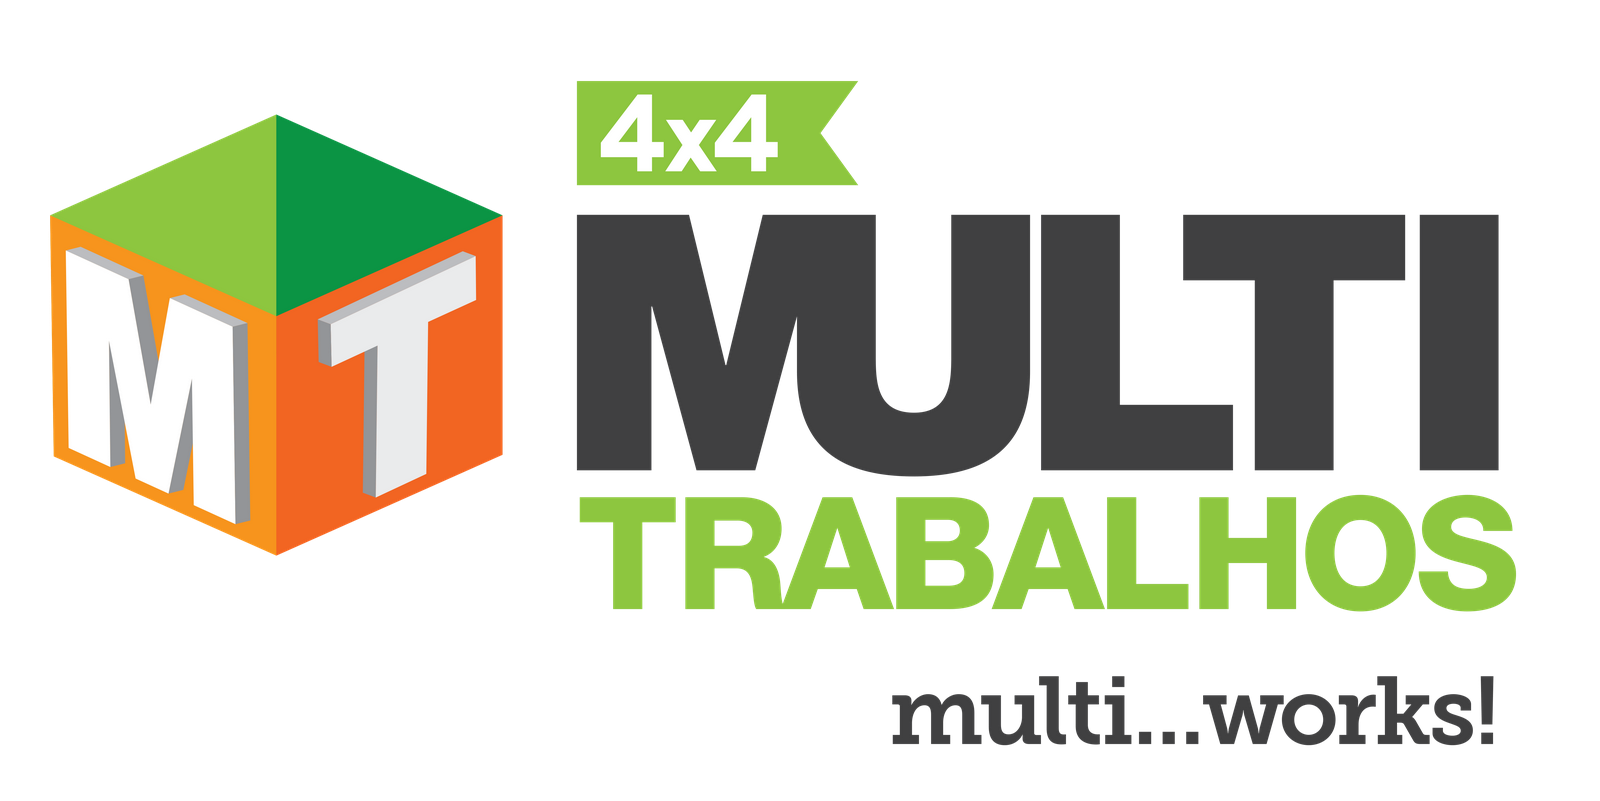 4x4 Multitrabalhos